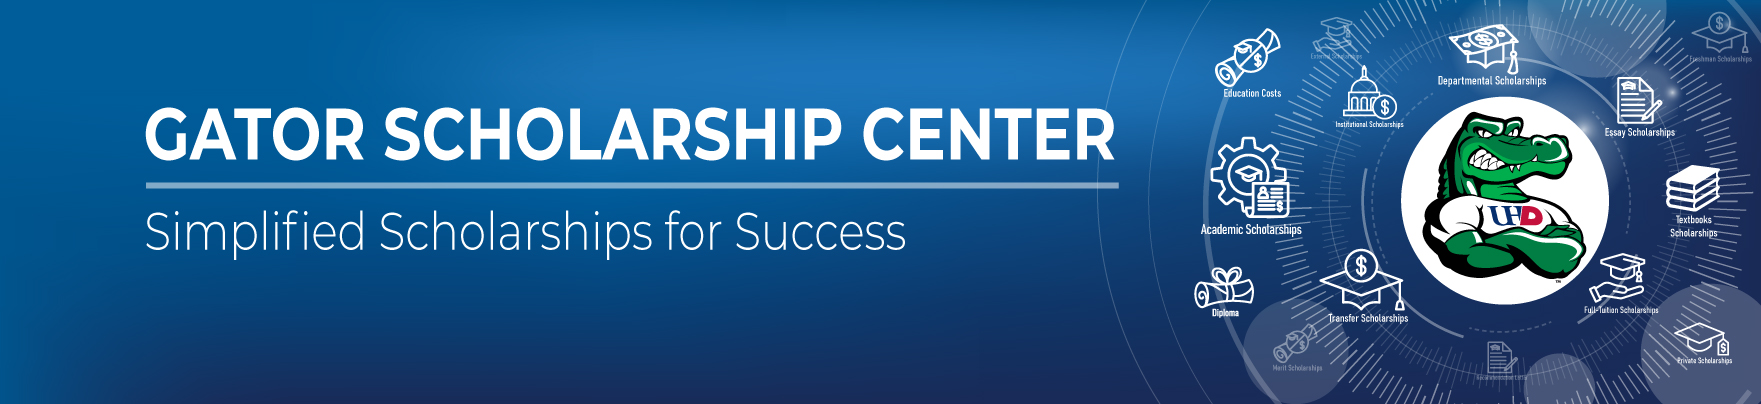 Gator Scholarship Center - Simplified Scholarships for Success